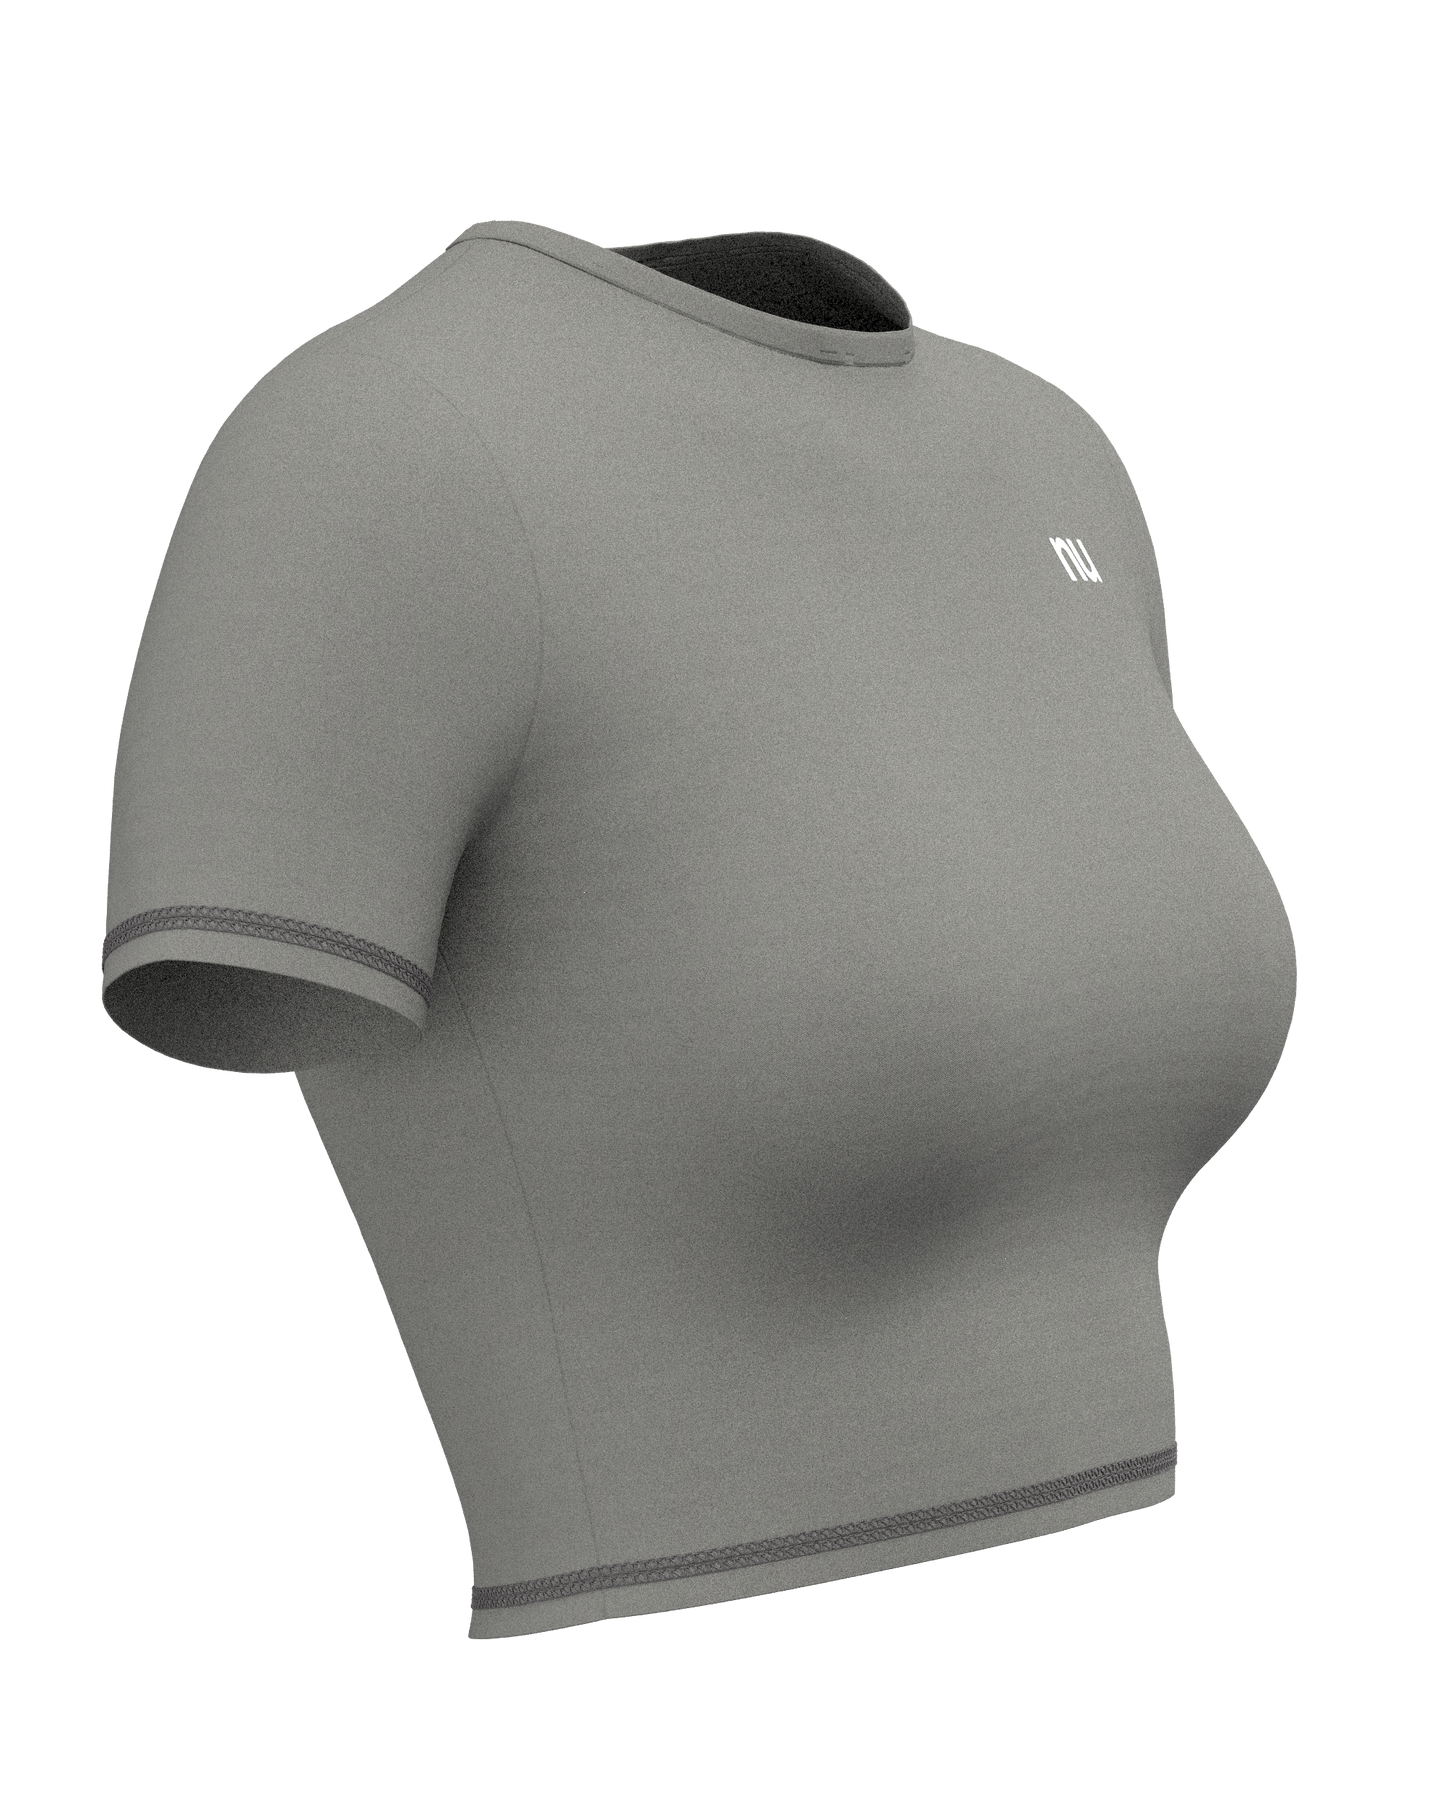 Neau Grey Sporty Short Sleeve Crop Top